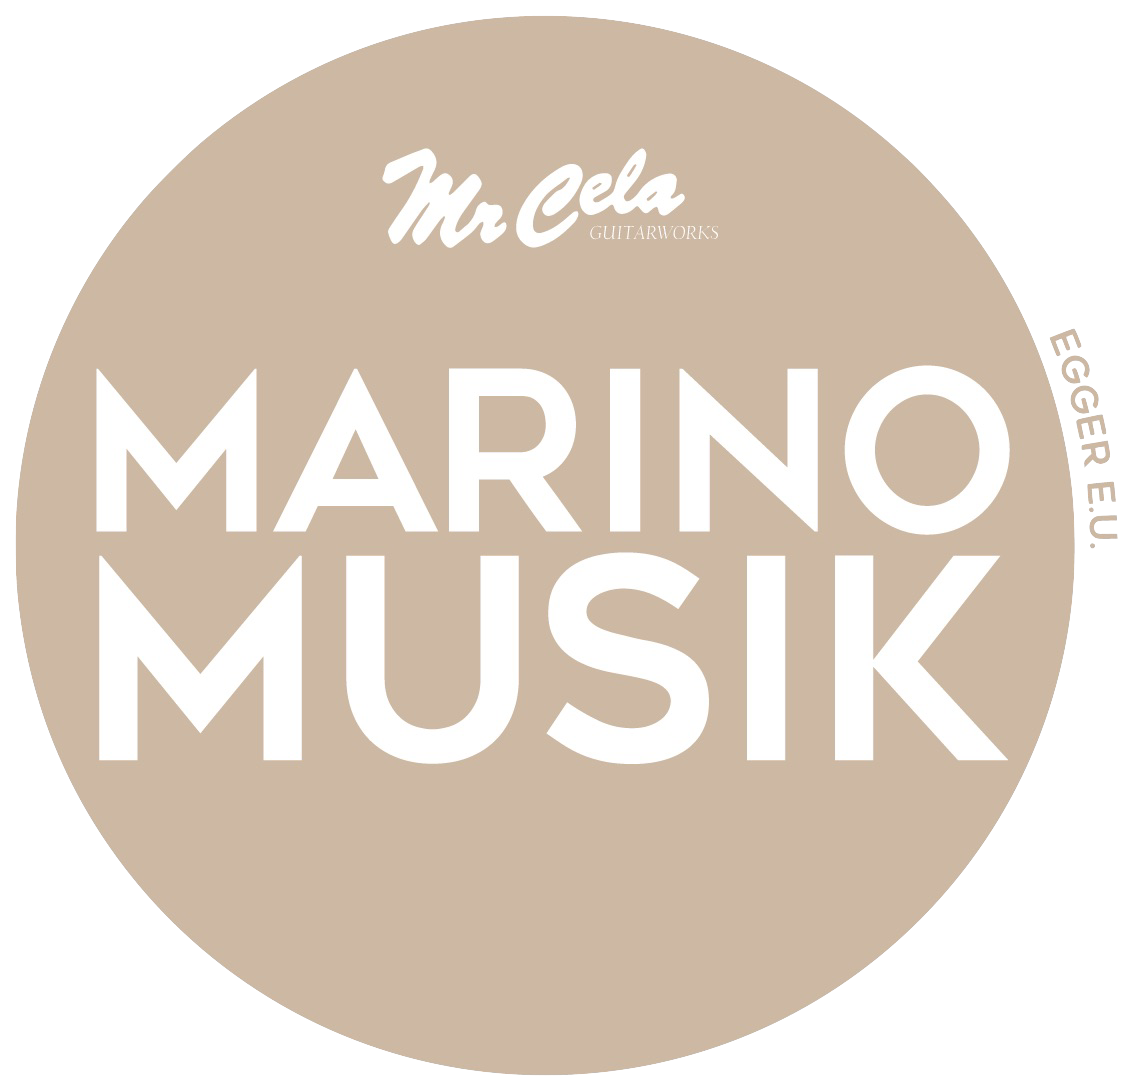 Marino Logo